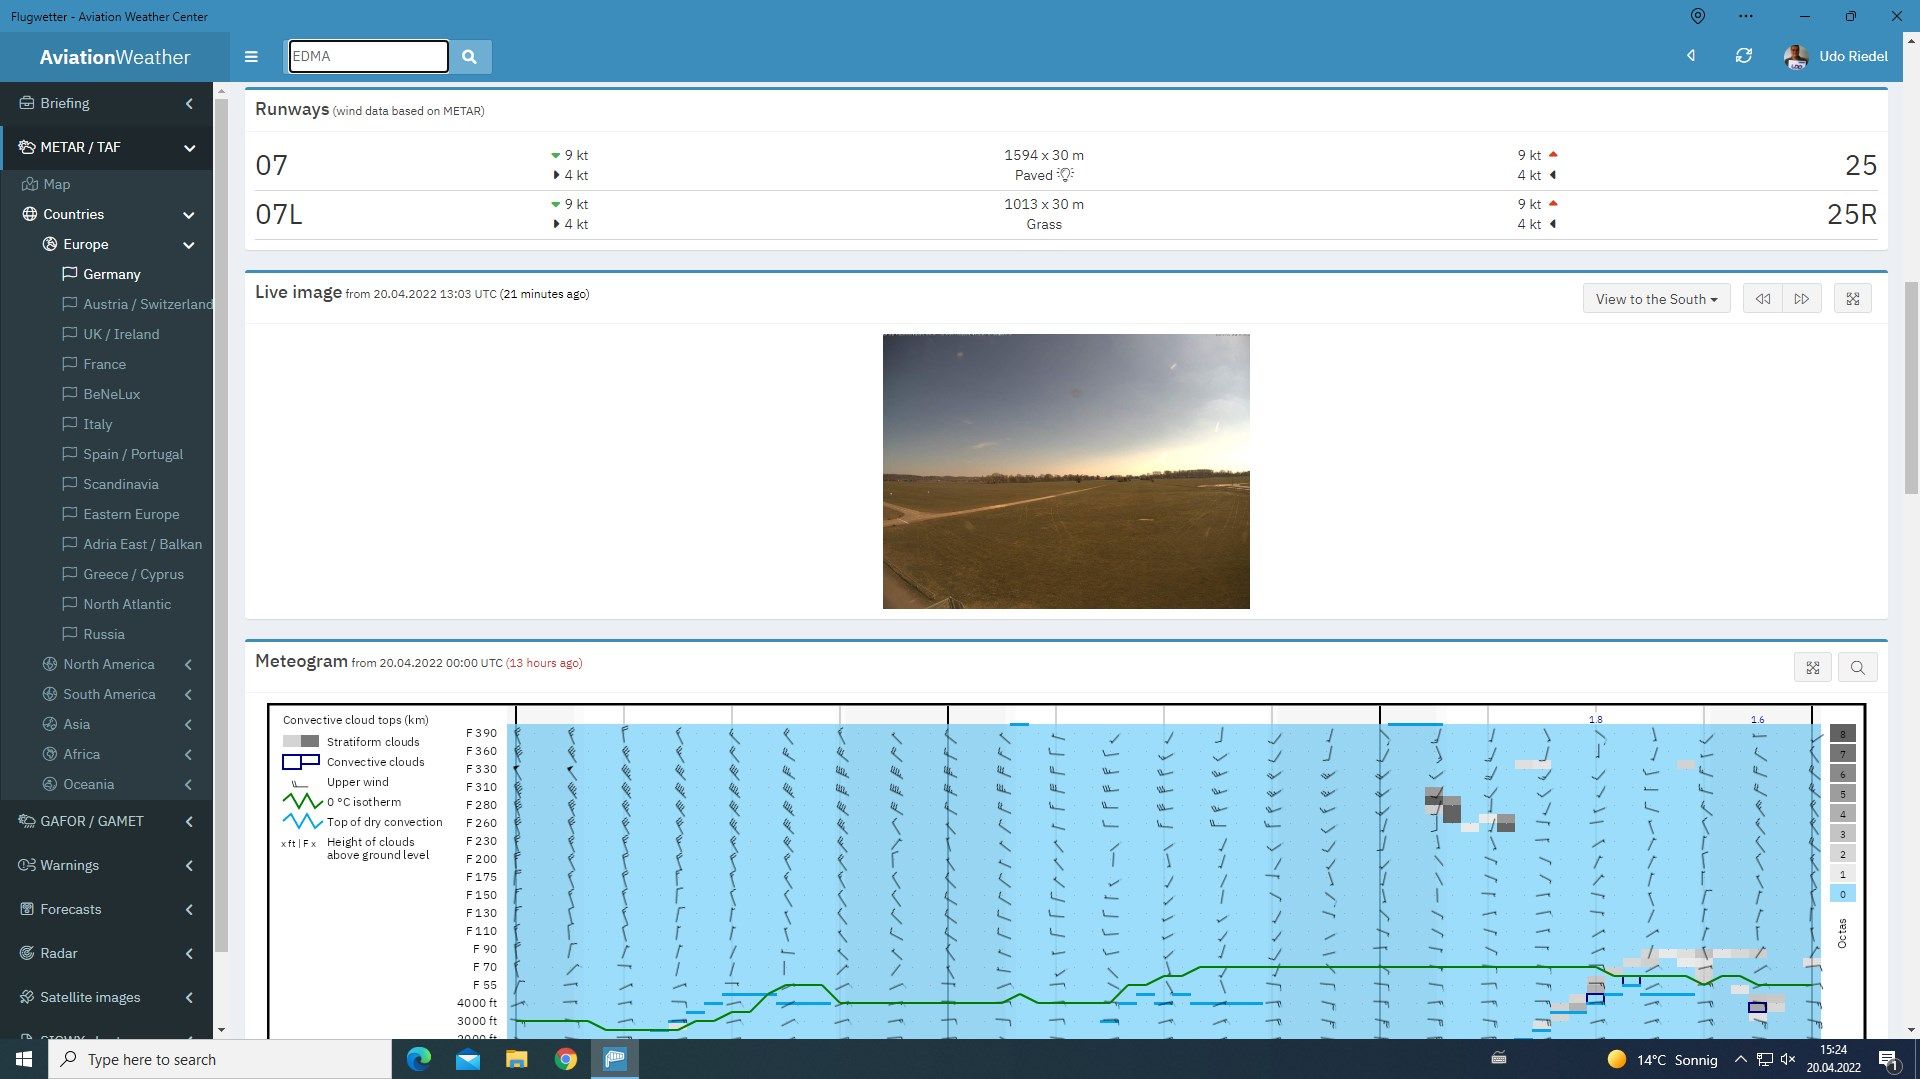 Runway data, webcam images and meteograms